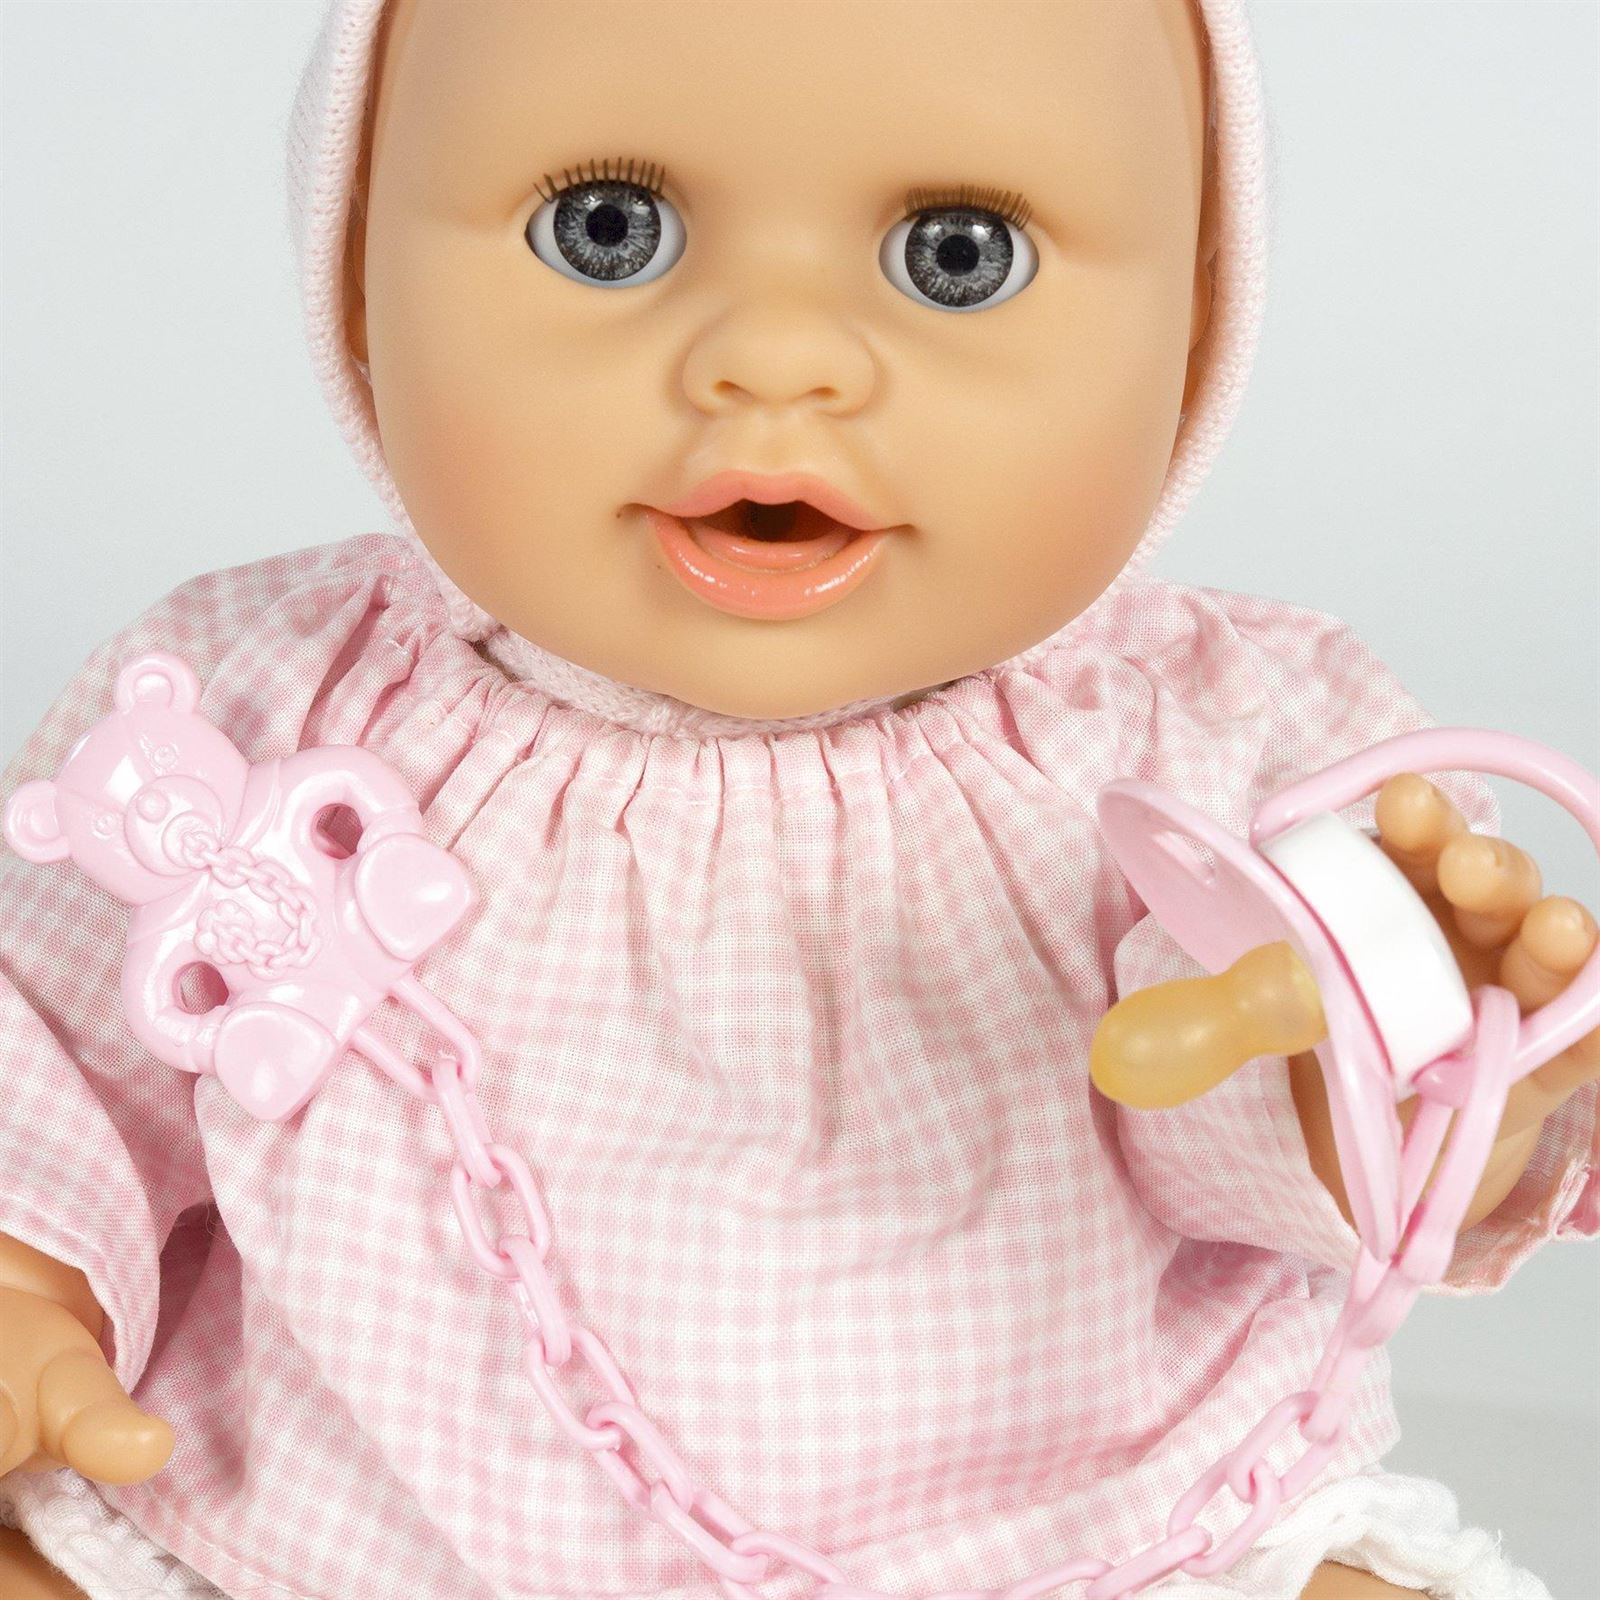 Baby Isabela Interactiva con Gorro - Imagen 4